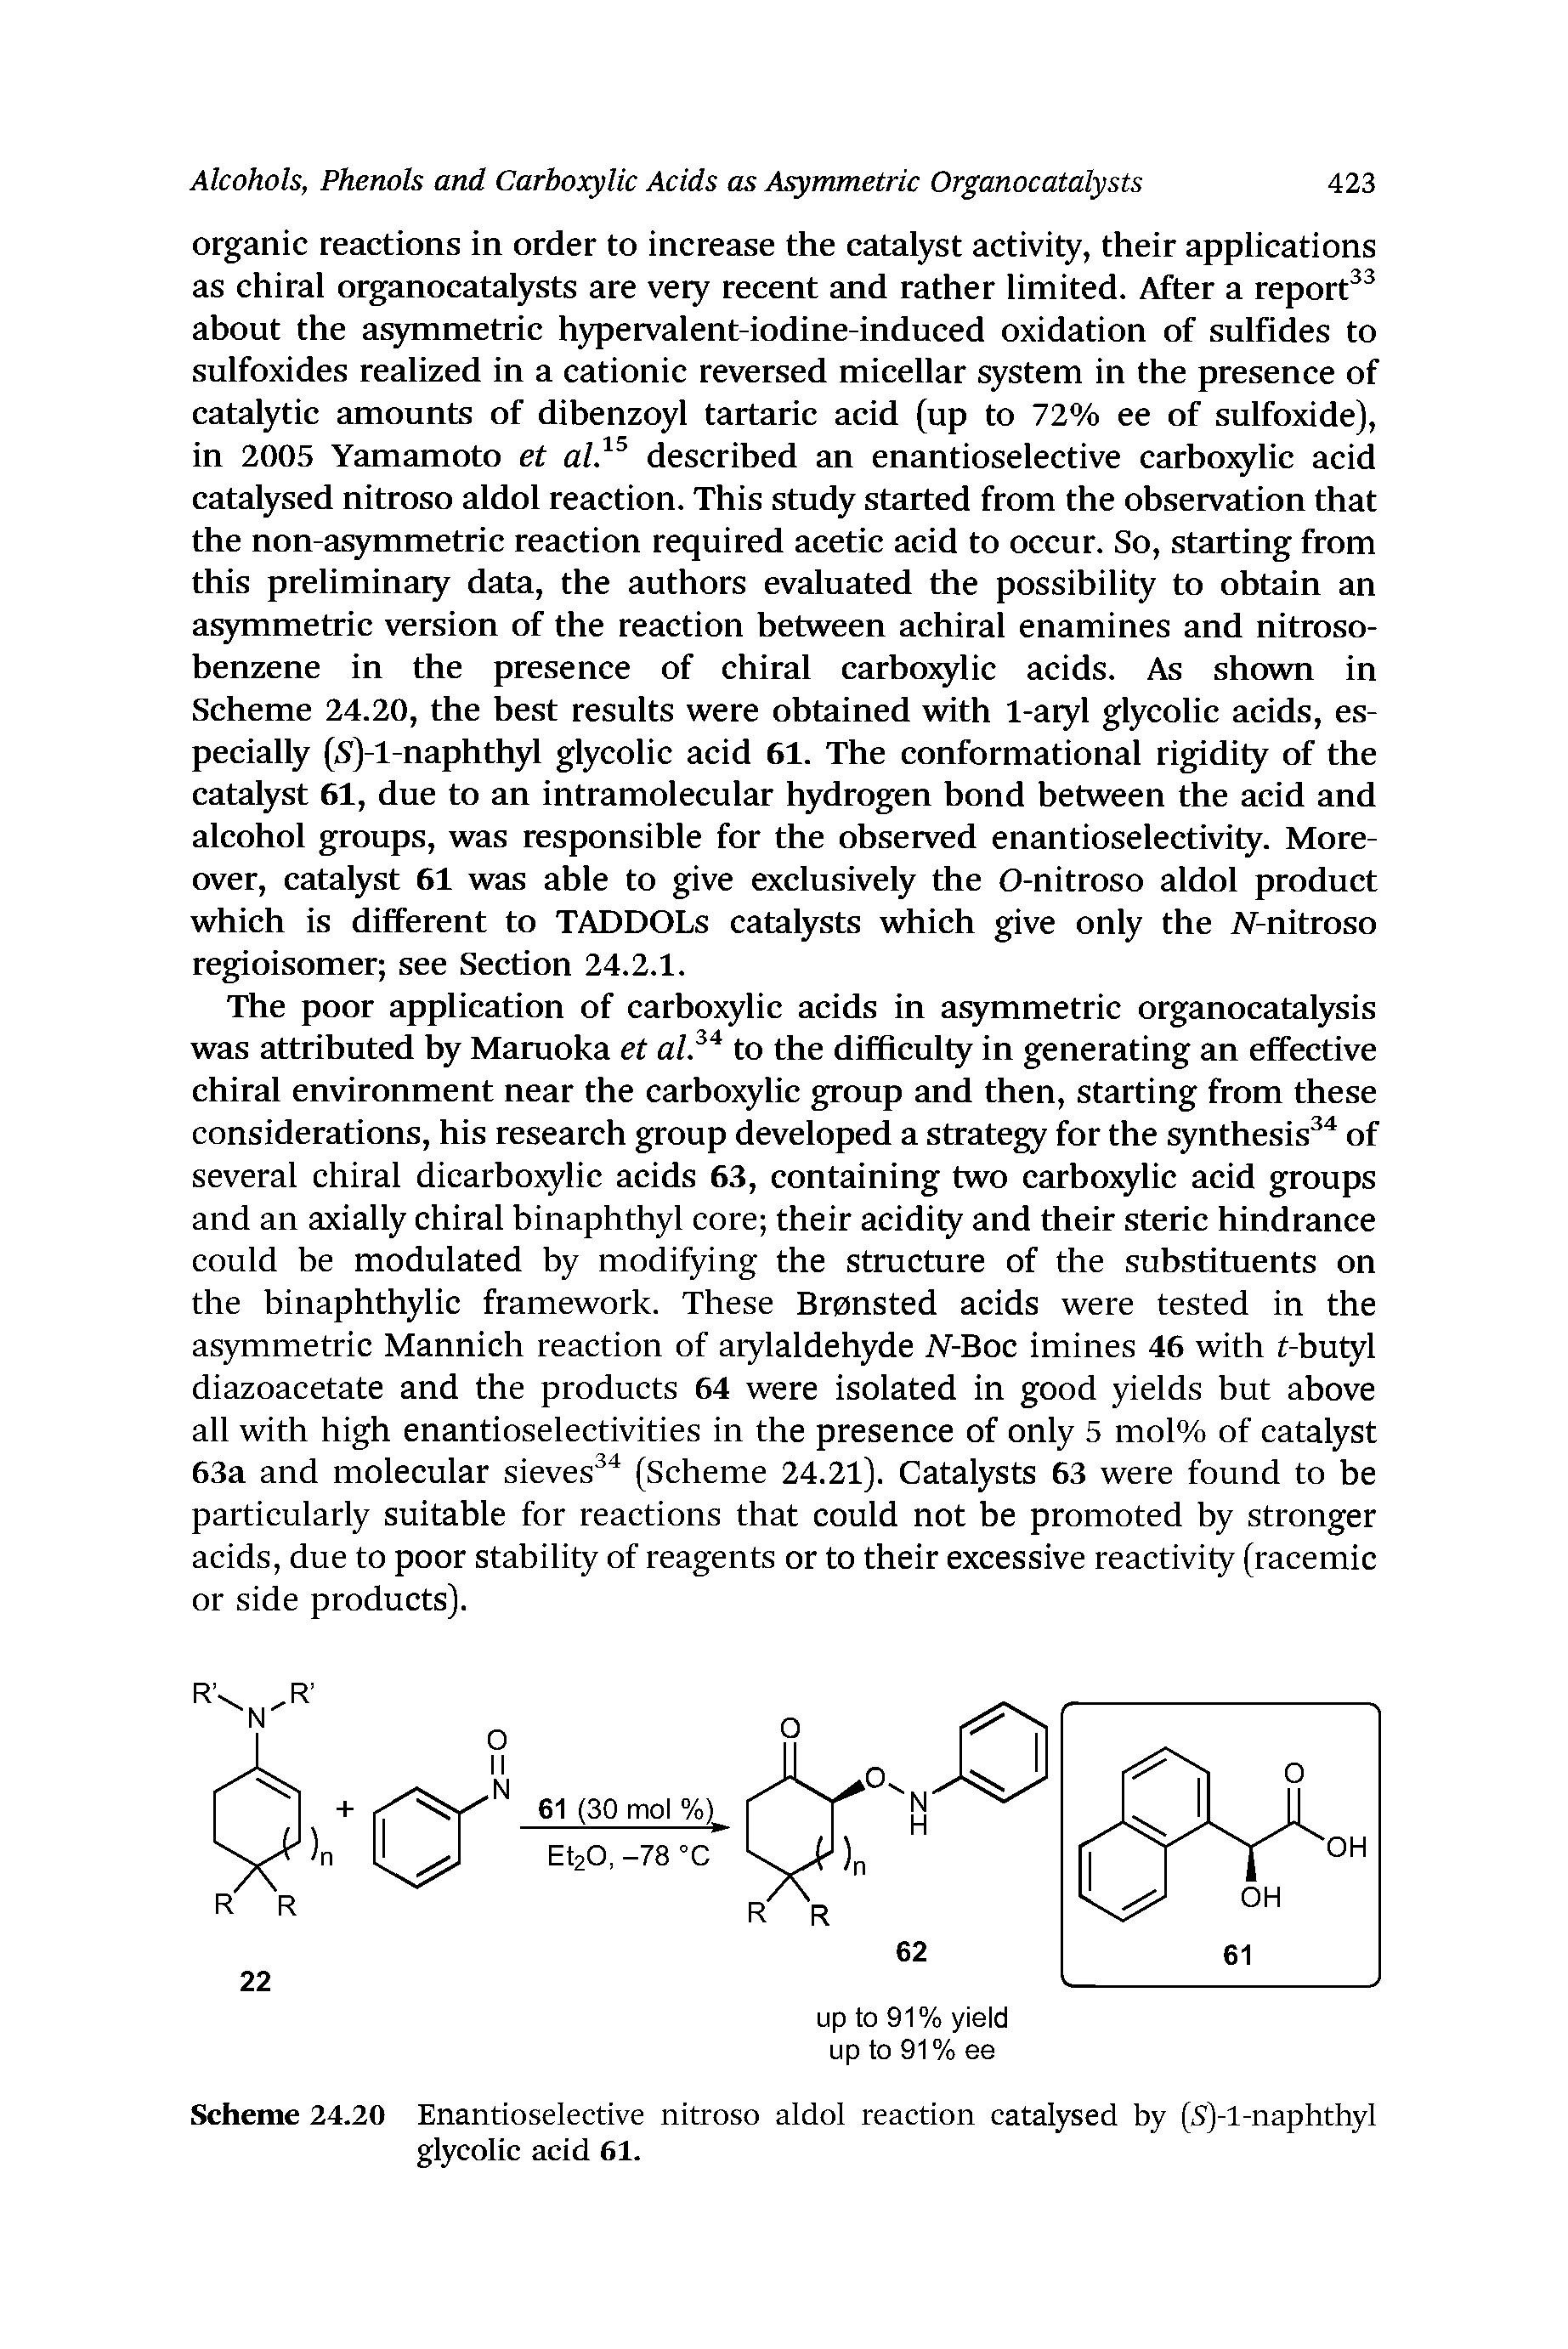 Scheme 24.20 Enantioselective nitroso aldol reaction catalysed by (S)-l-naphthyl glycolic acid 61.